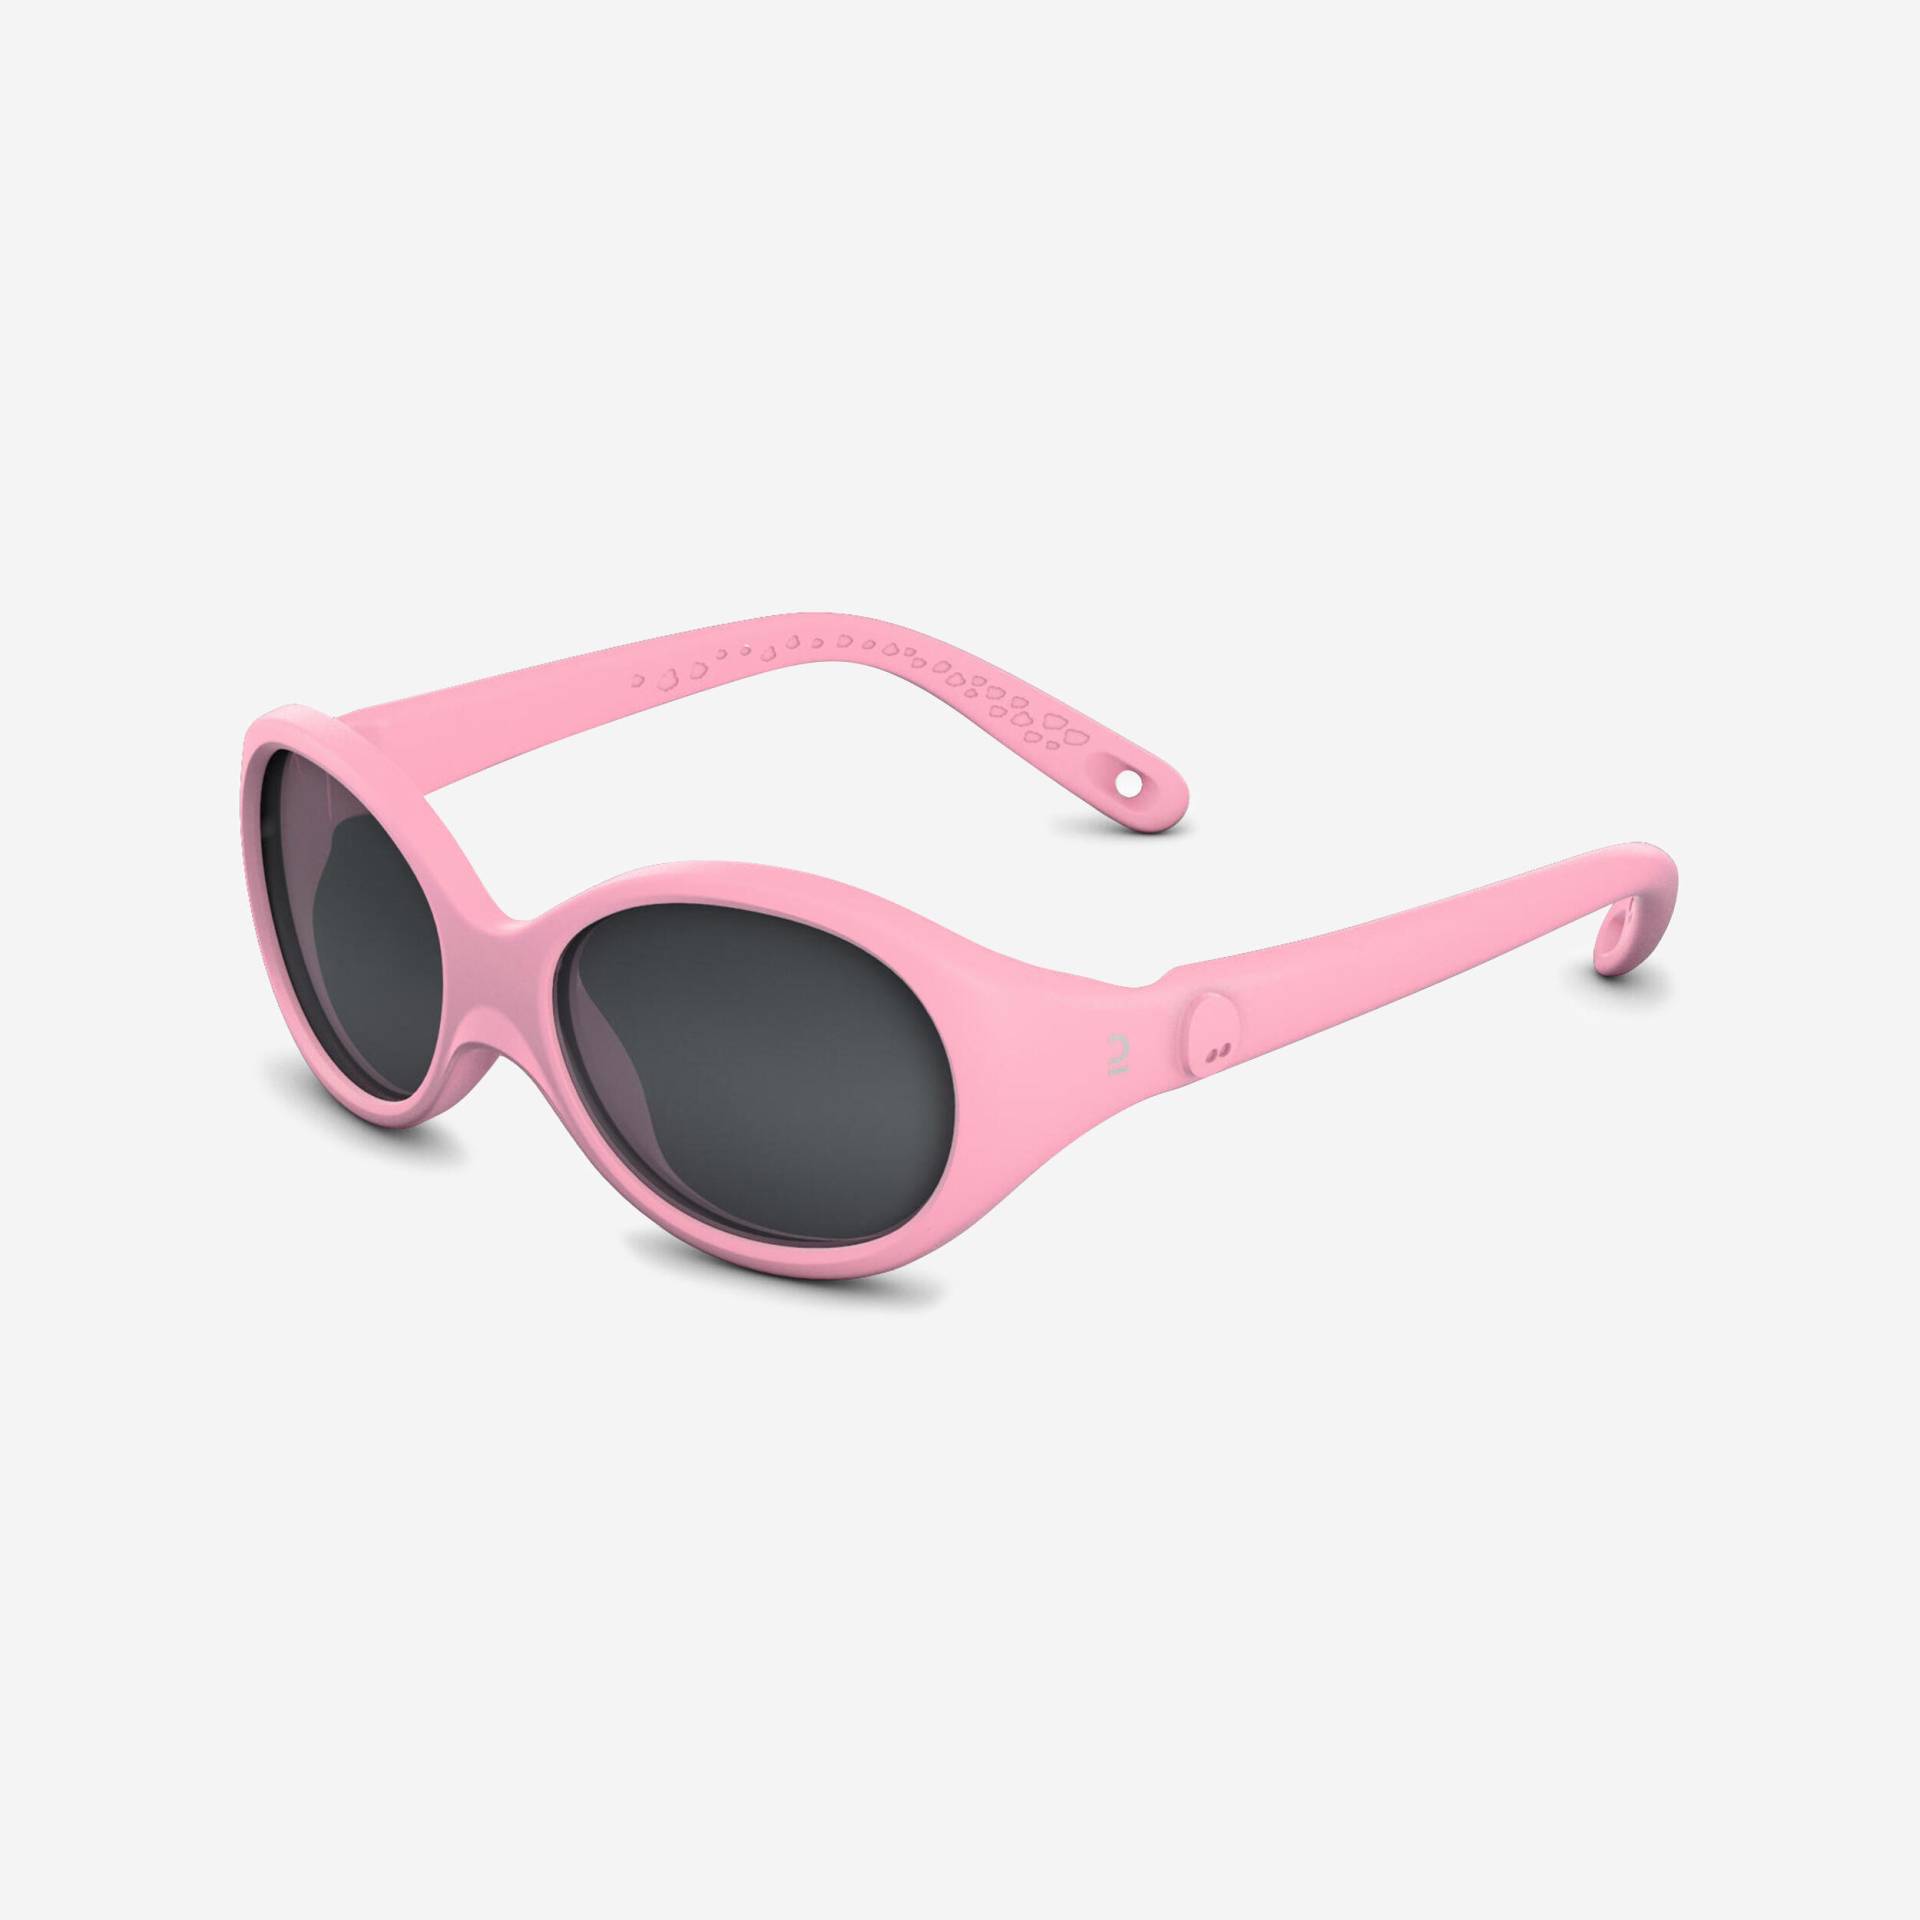 Sonnenbrille MH100 Baby 6–24 Monate Kategorie 4 pink von QUECHUA